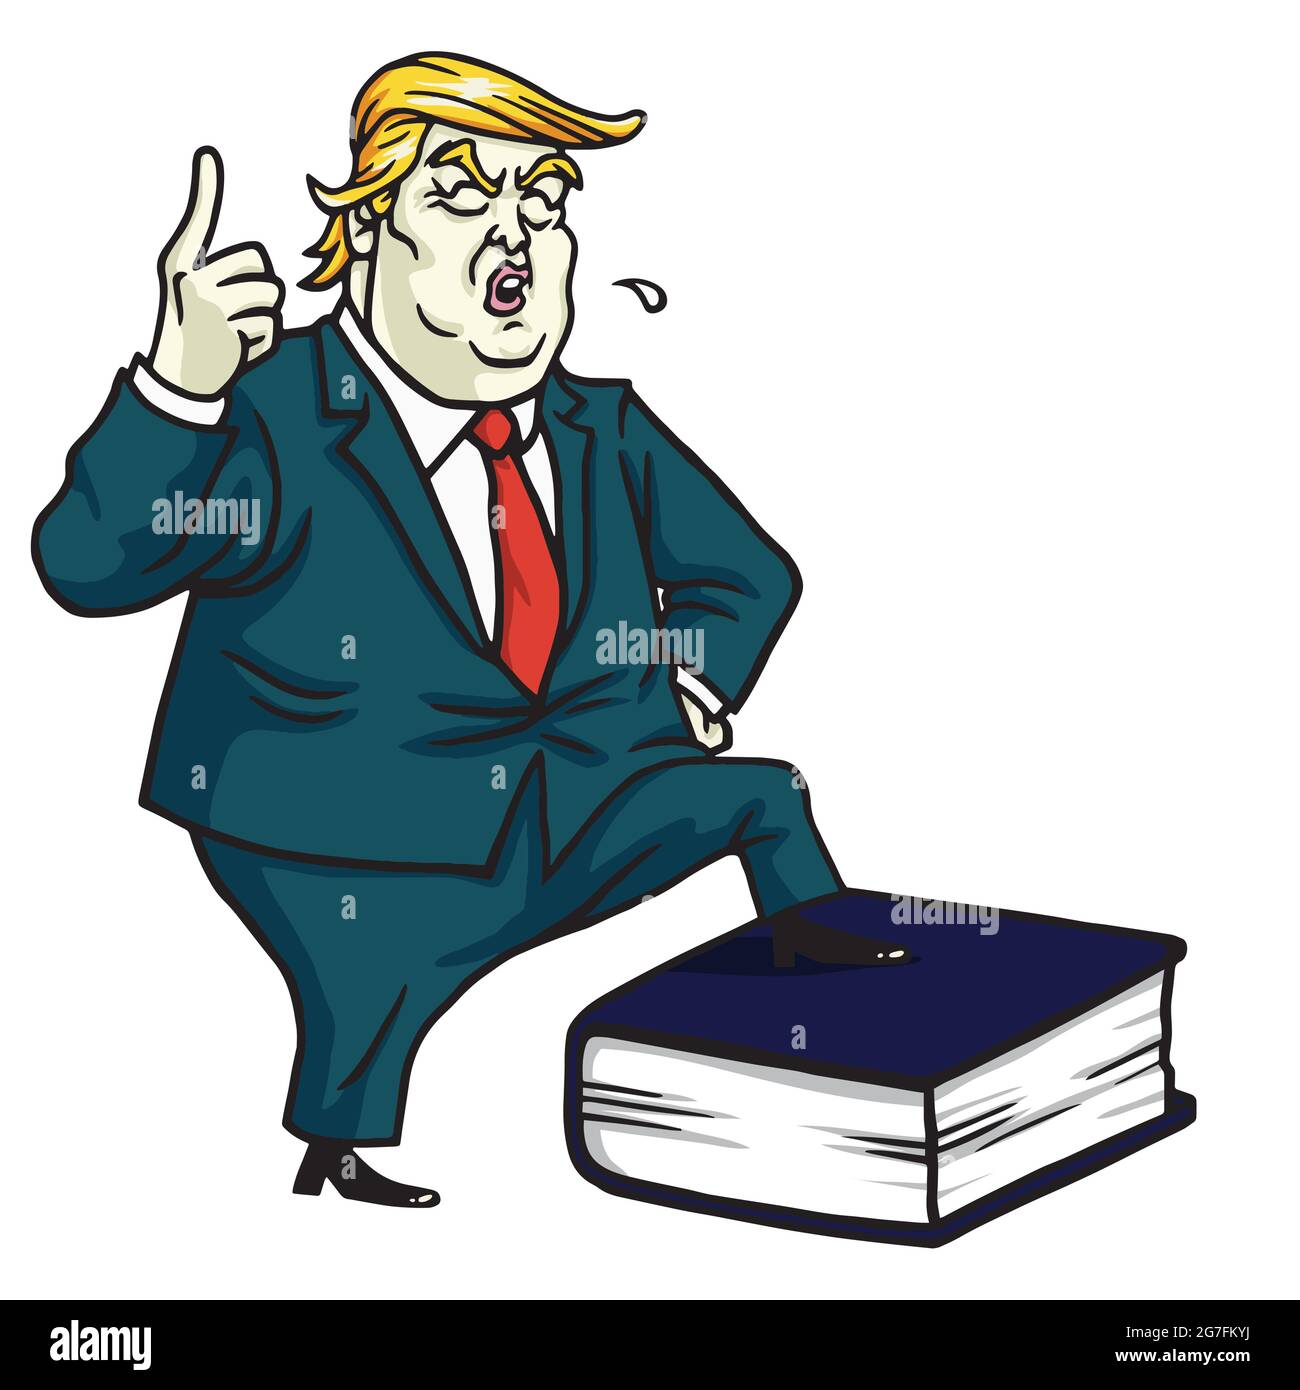 Donald Trump Standing on Constitution Book. Vector Cartoon Illustration Stock Vector